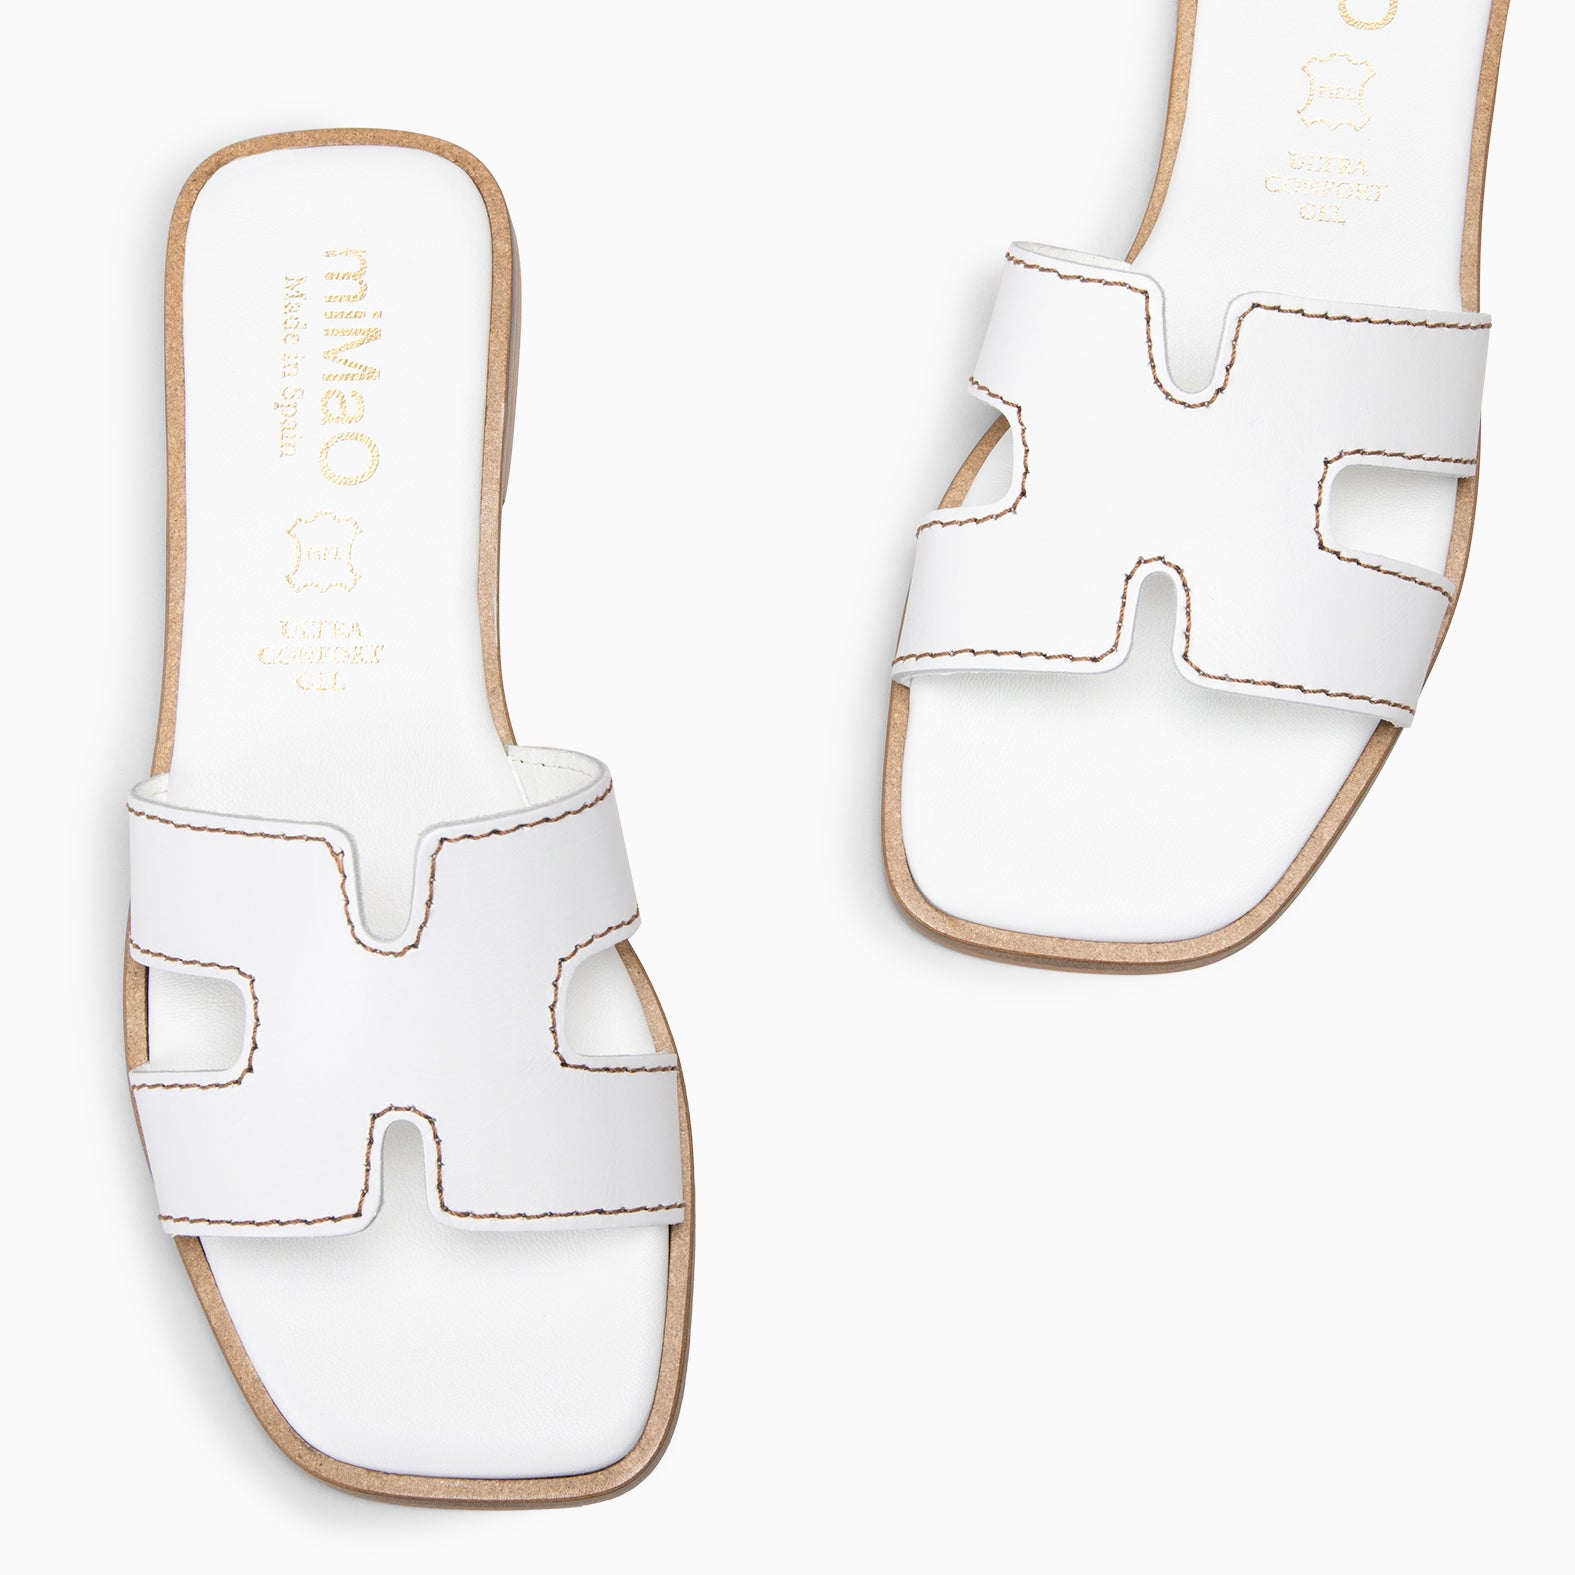 LUXOR – WHITE Flat Sandals